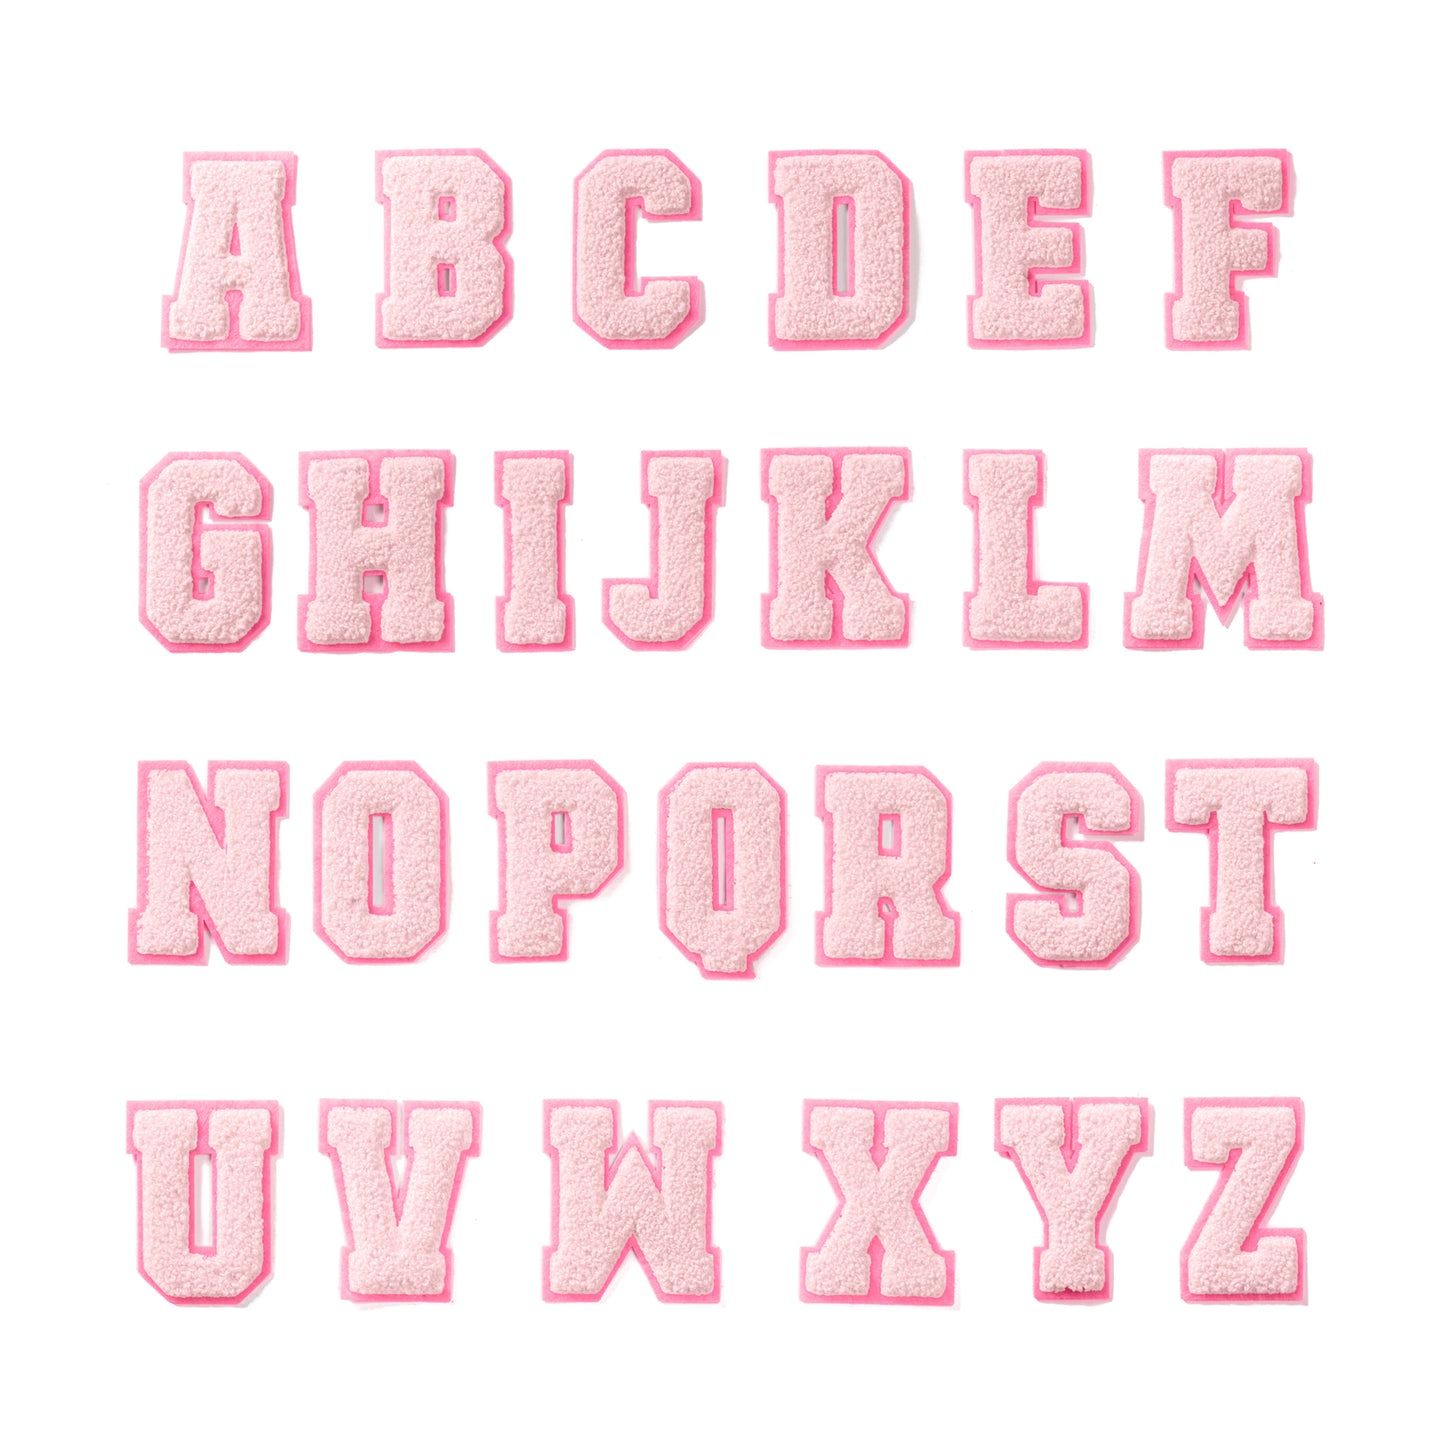 Custom Kids Lilac Sweatshirt - 4 Letters